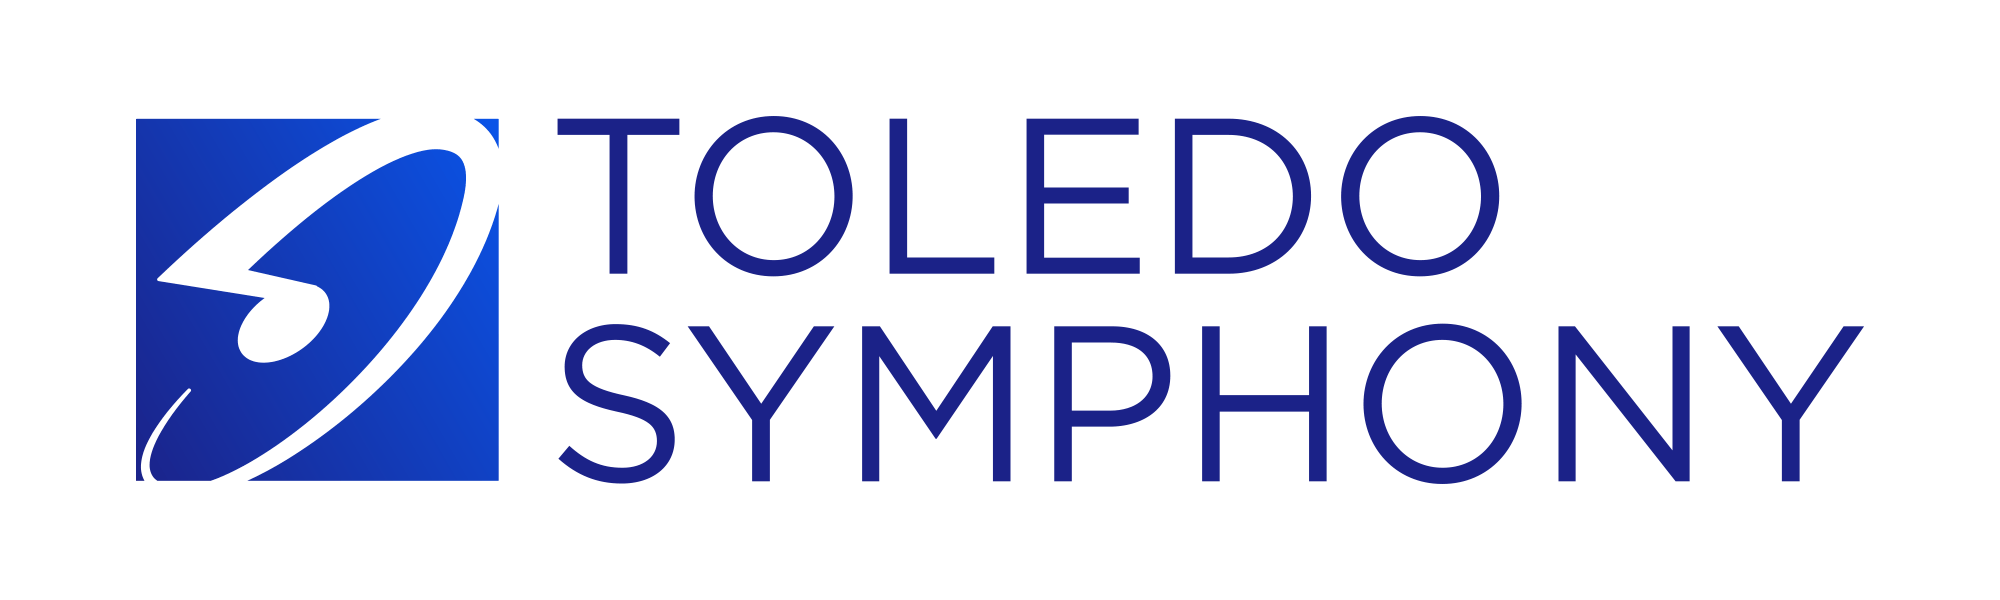 Toledo Logo - Toledo Symphony Orchestra Branding Assets - Toledo Symphony Orchestra